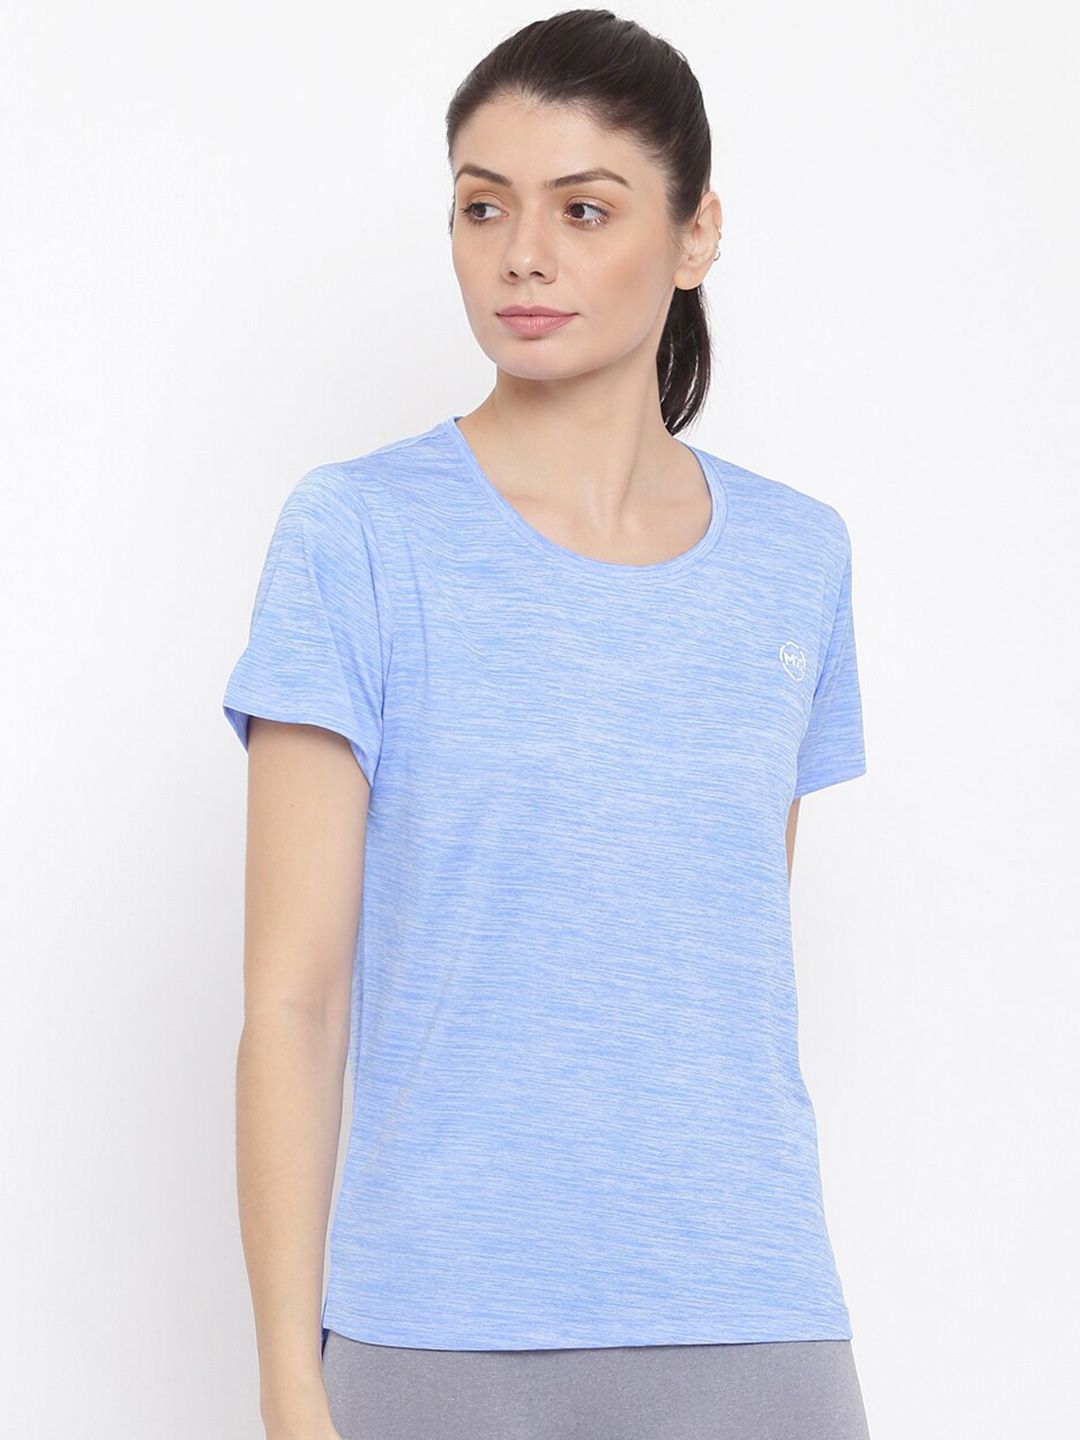 MKH Women Blue Dri-FIT T-shirt Price in India